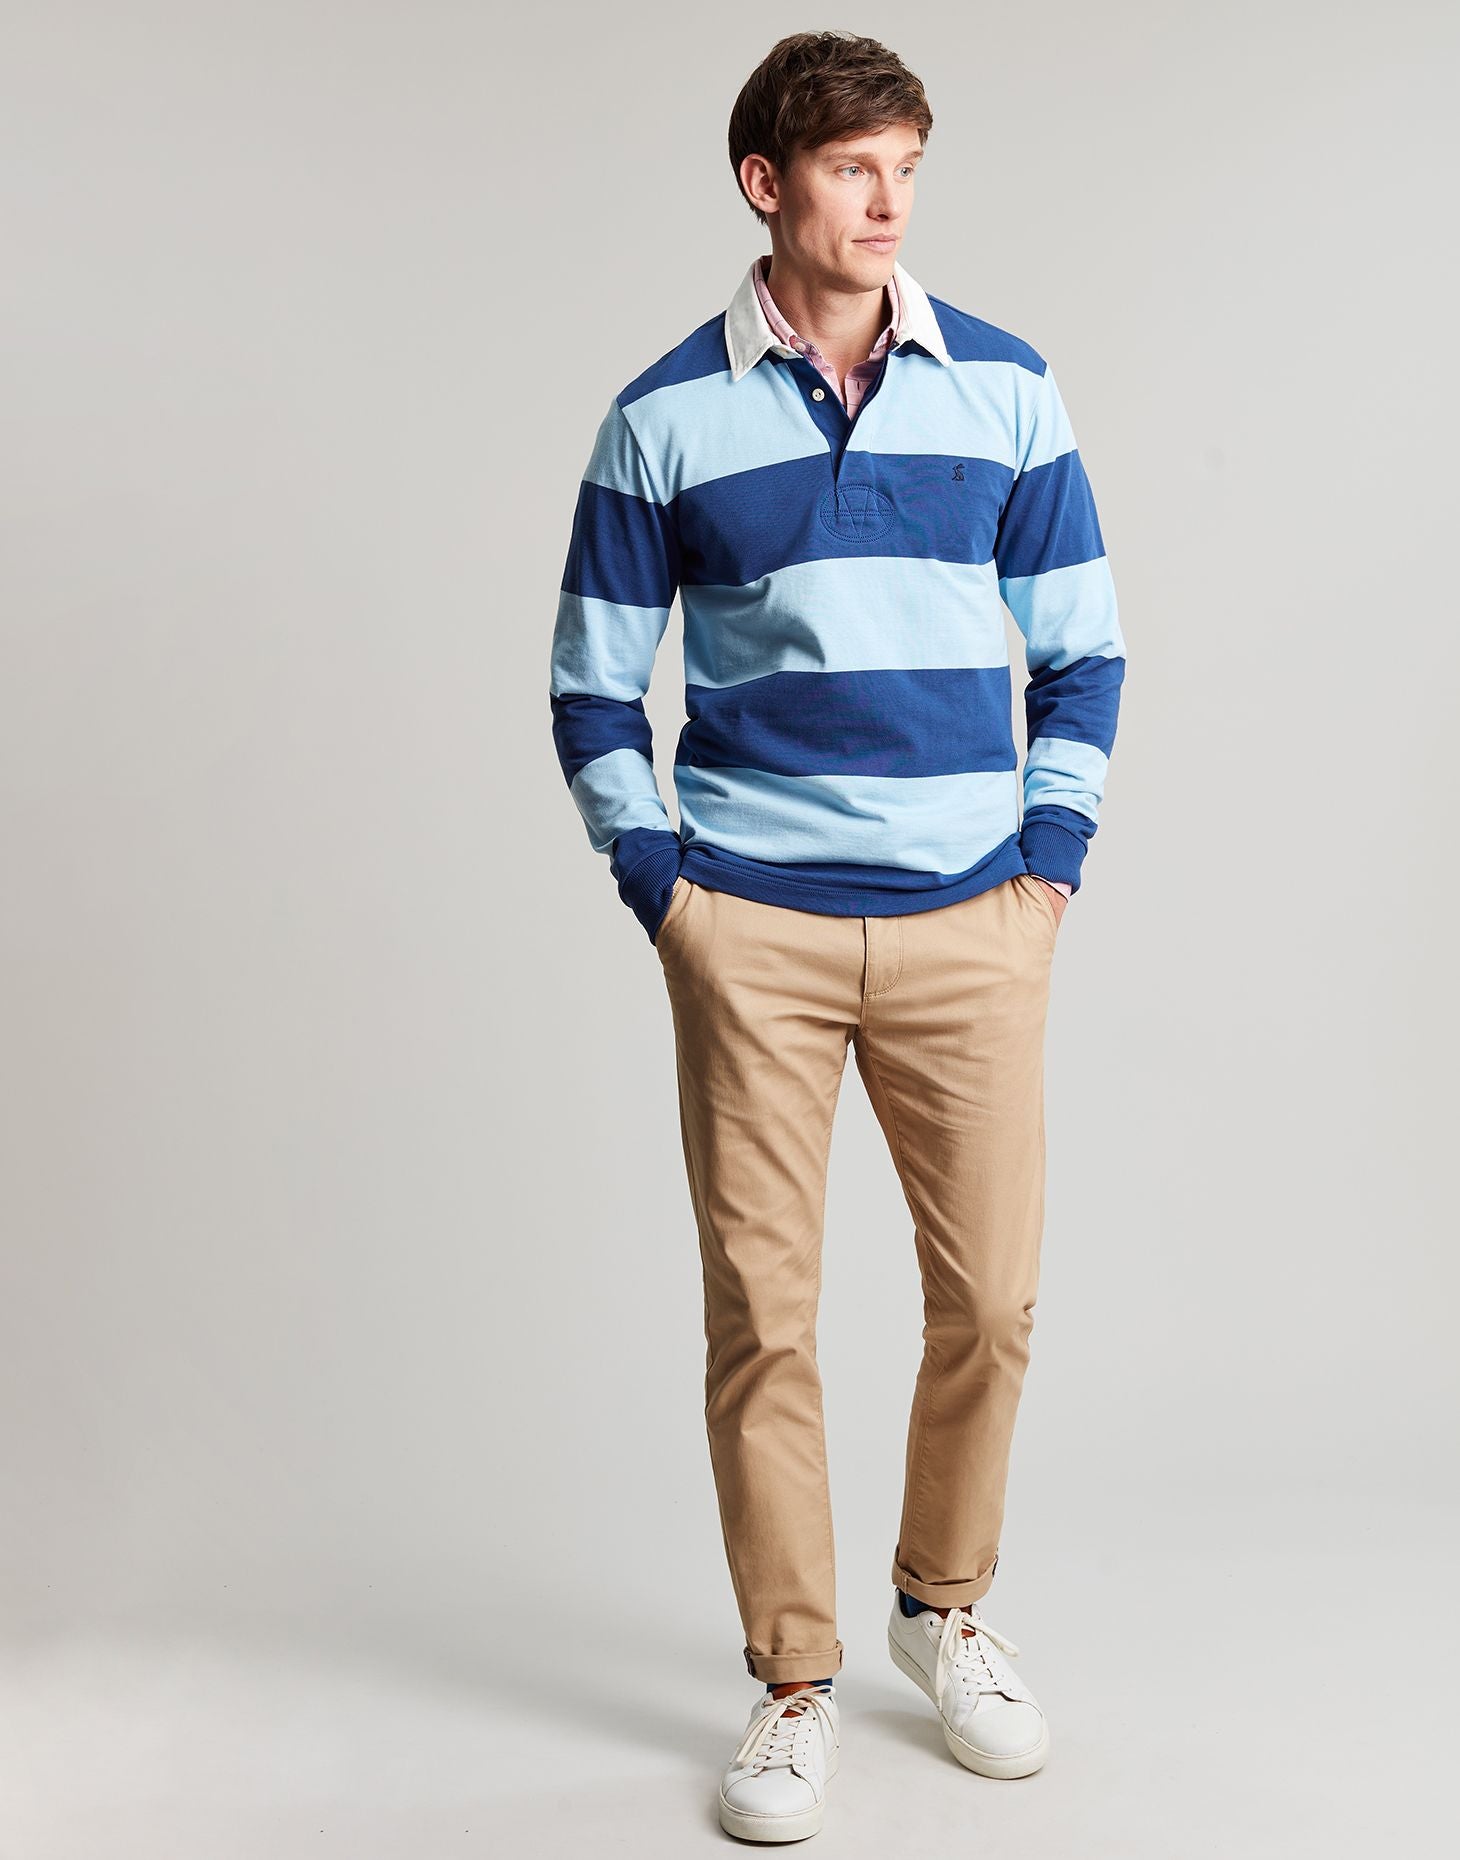 Onside Rugby Shirt - Blue Stripe